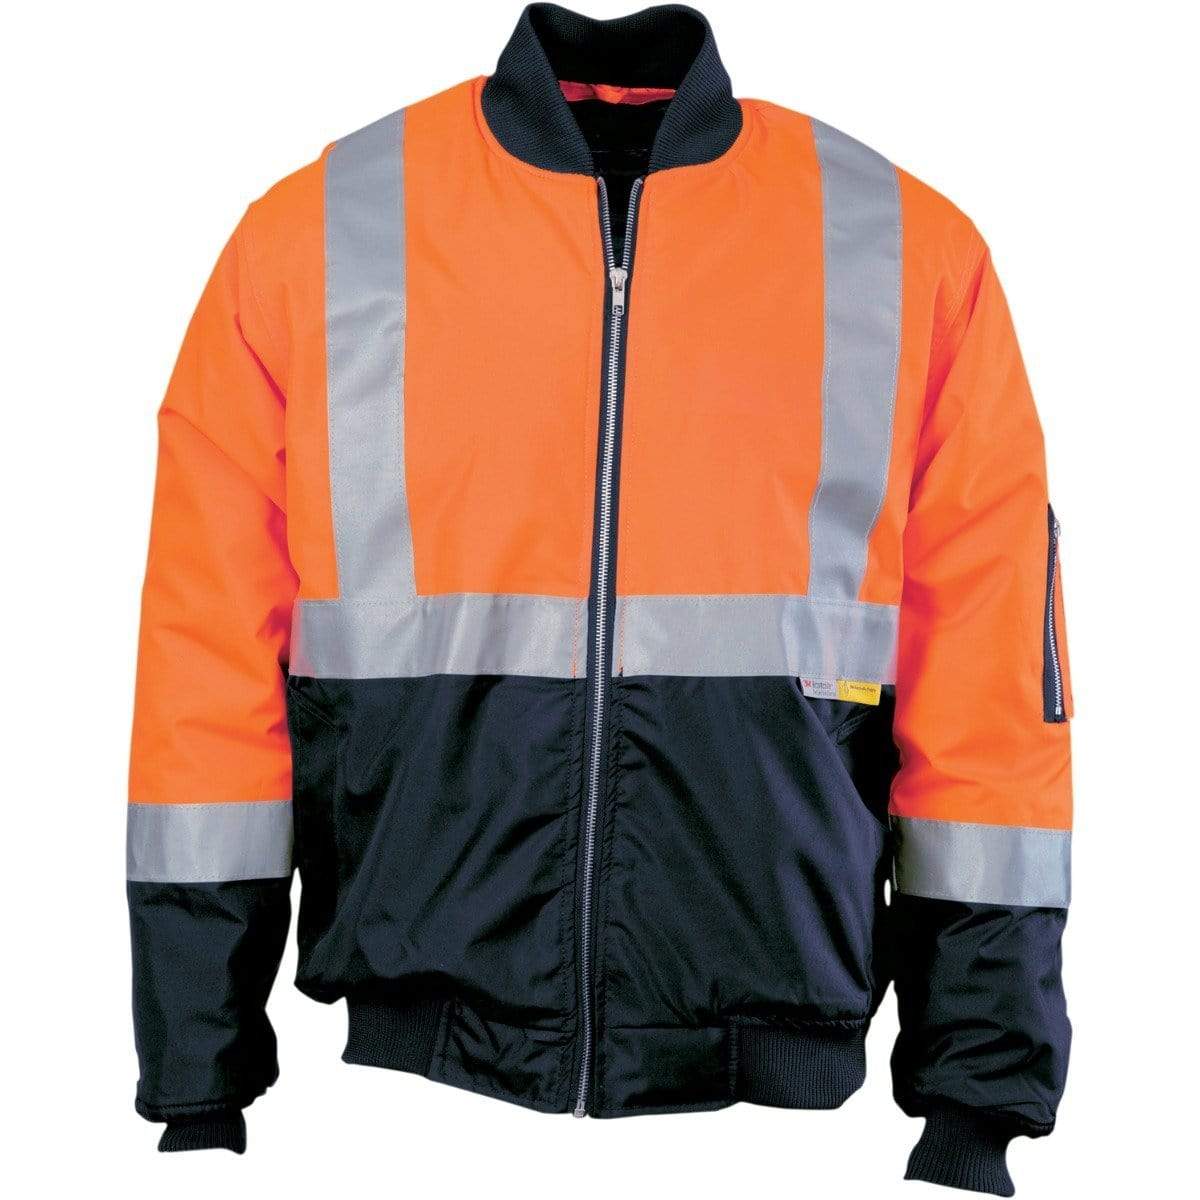 Dnc Workwear Hi-vis Two Tone Flying Jacket With 3m Reflective Tape - 3862 Work Wear DNC Workwear Orange/Navy S 